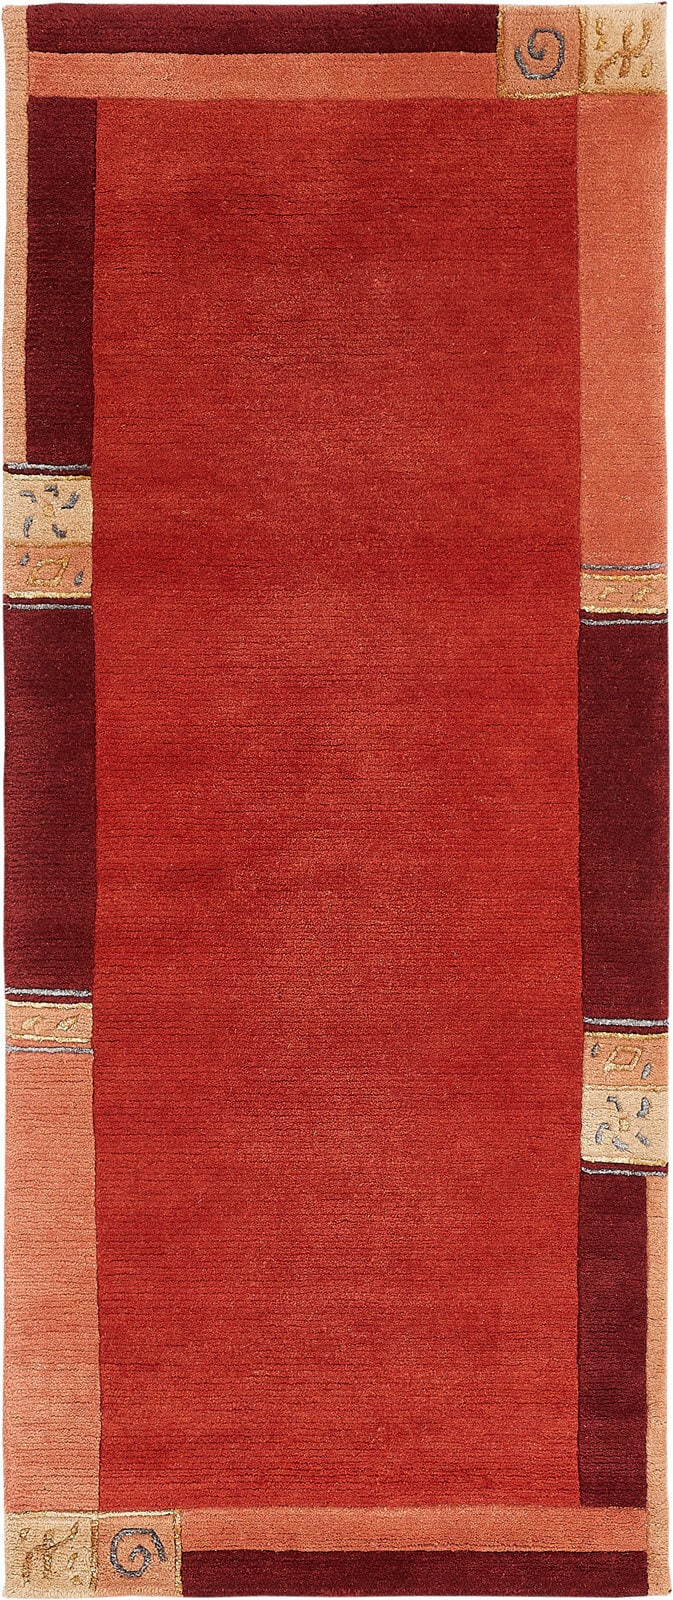 Teppich MANALI 80 x 300 cm rot